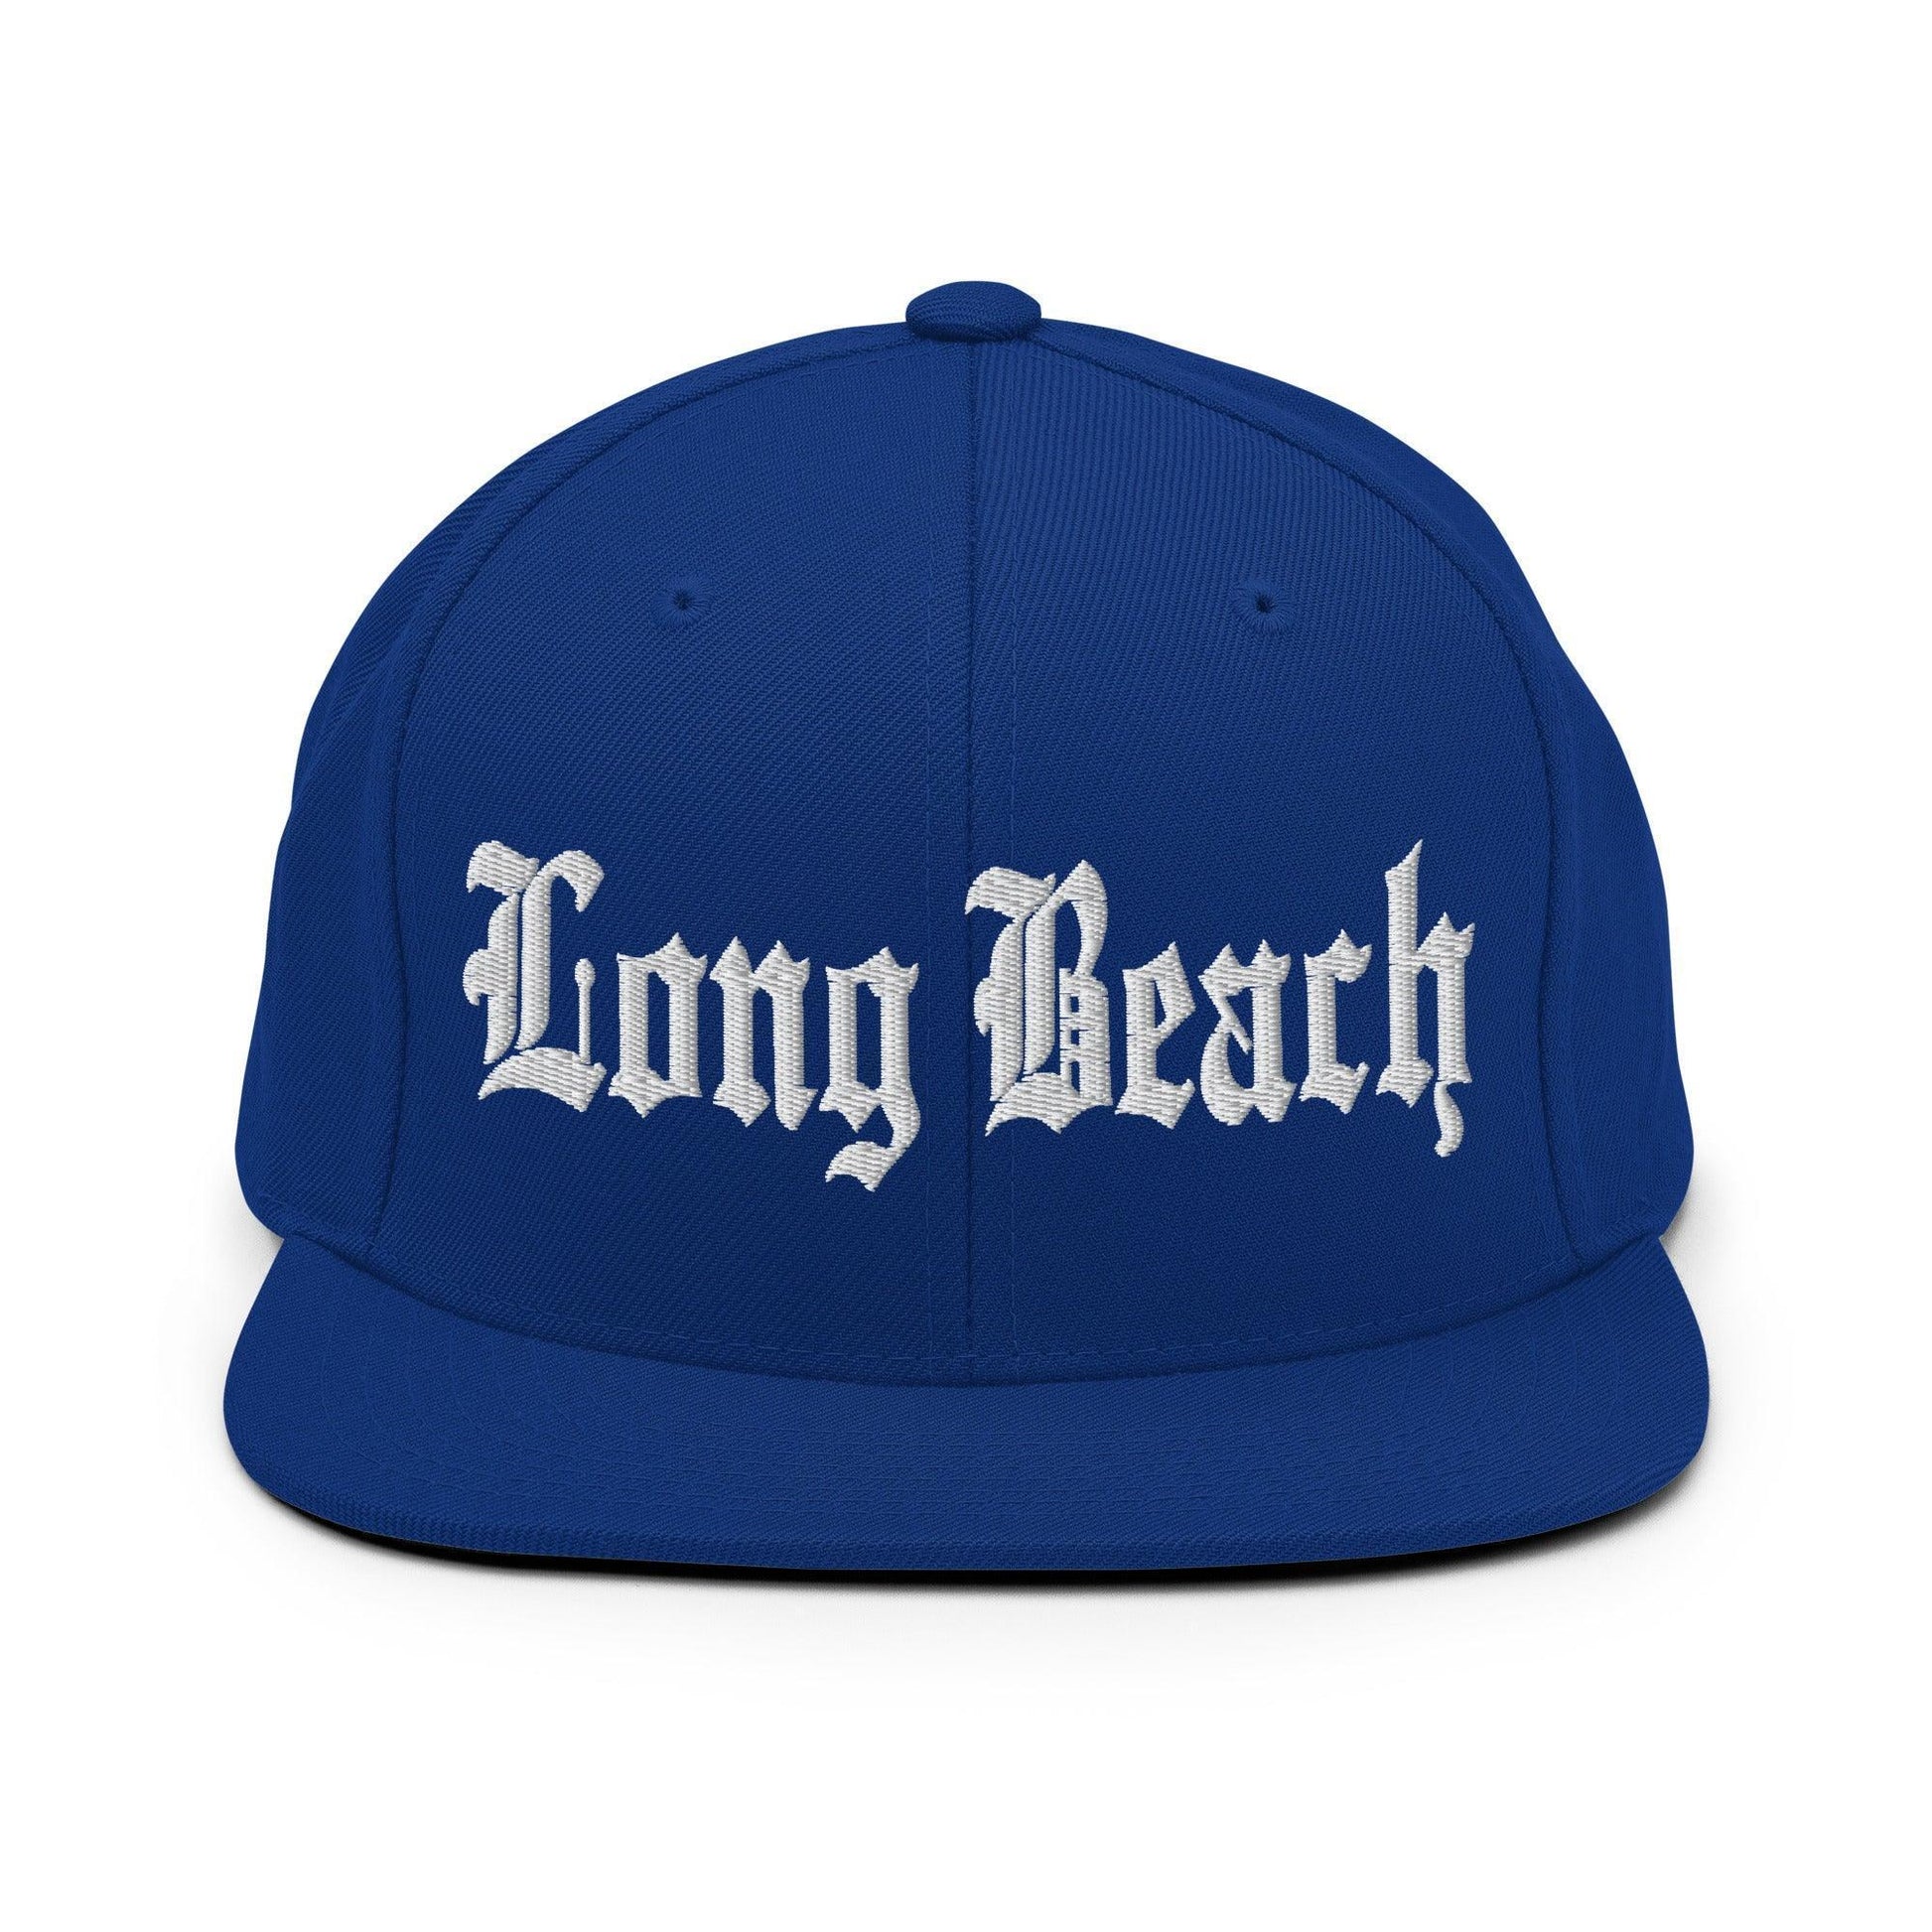 Long Beach Old English Snapback Hat Royal Blue